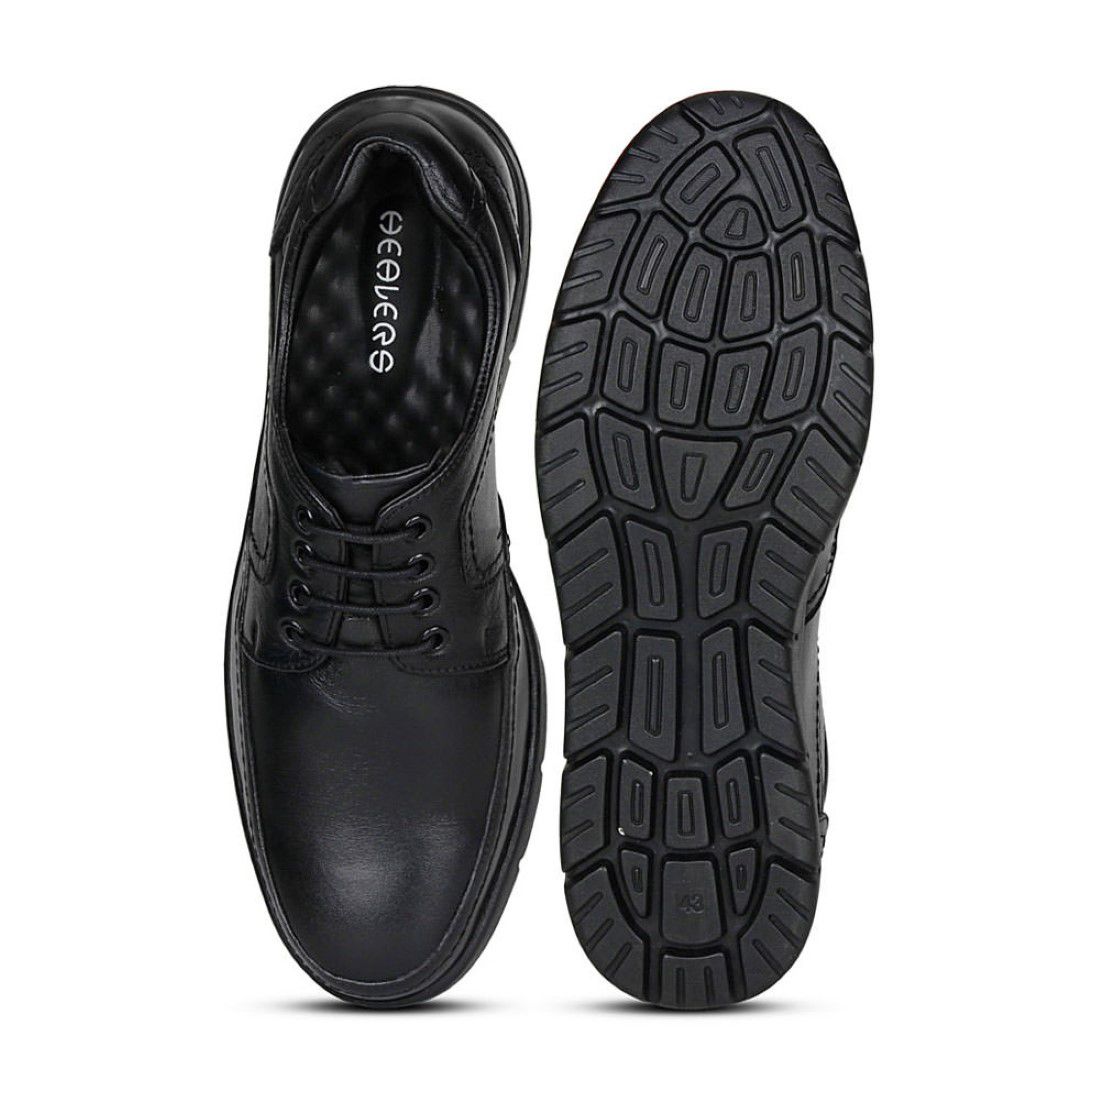 Liberty Healers Black Casual Shoes - Buy Liberty Healers Black Casual ...